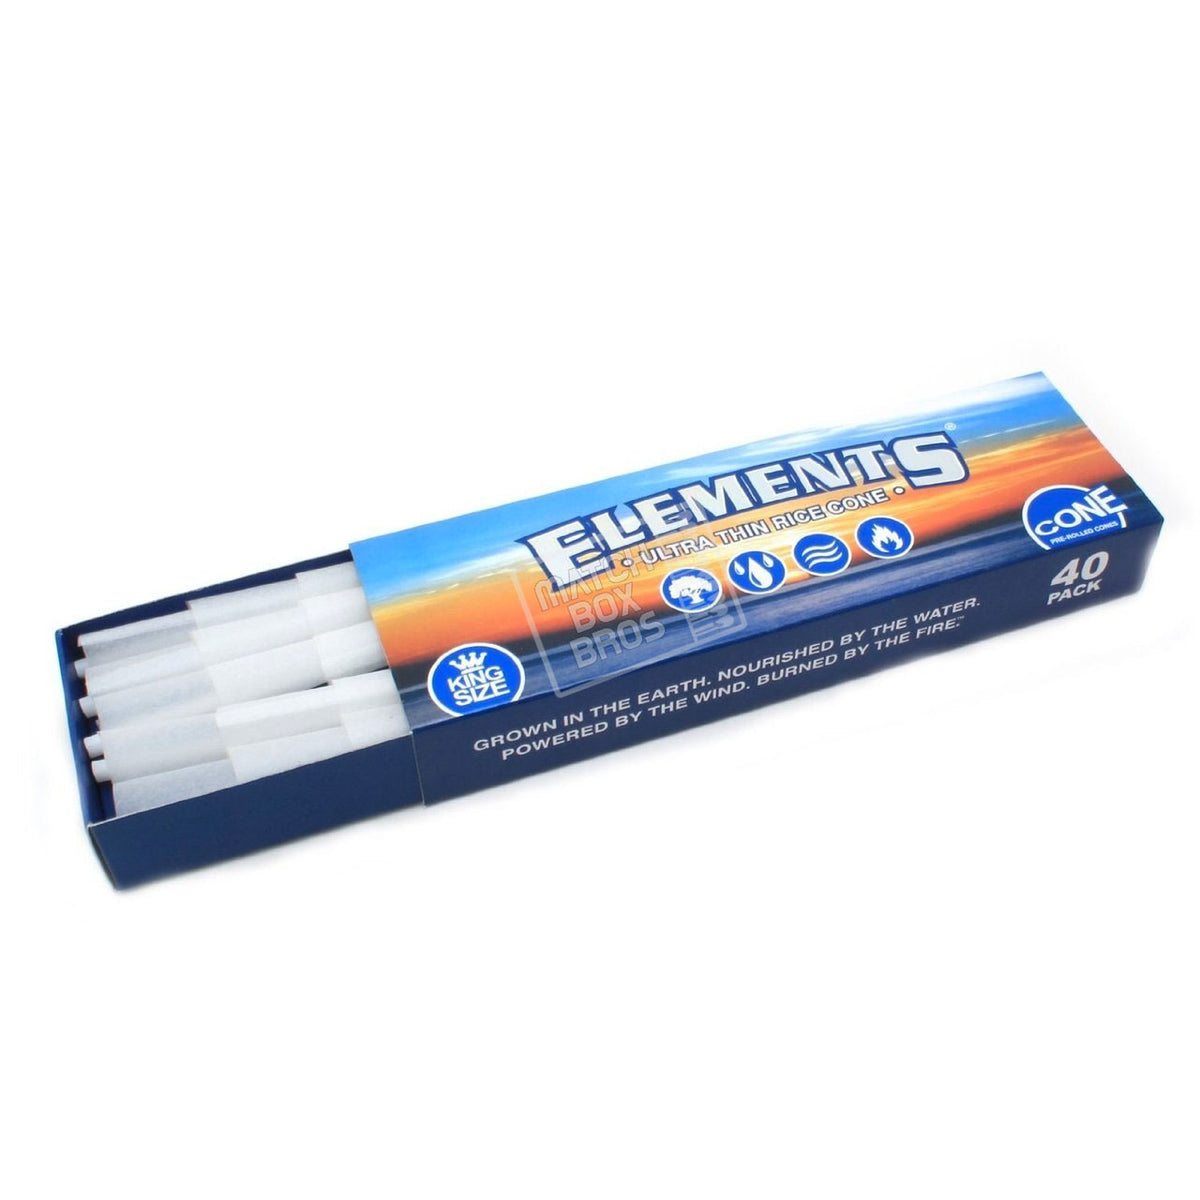 Elements KS Cones 40/Pack